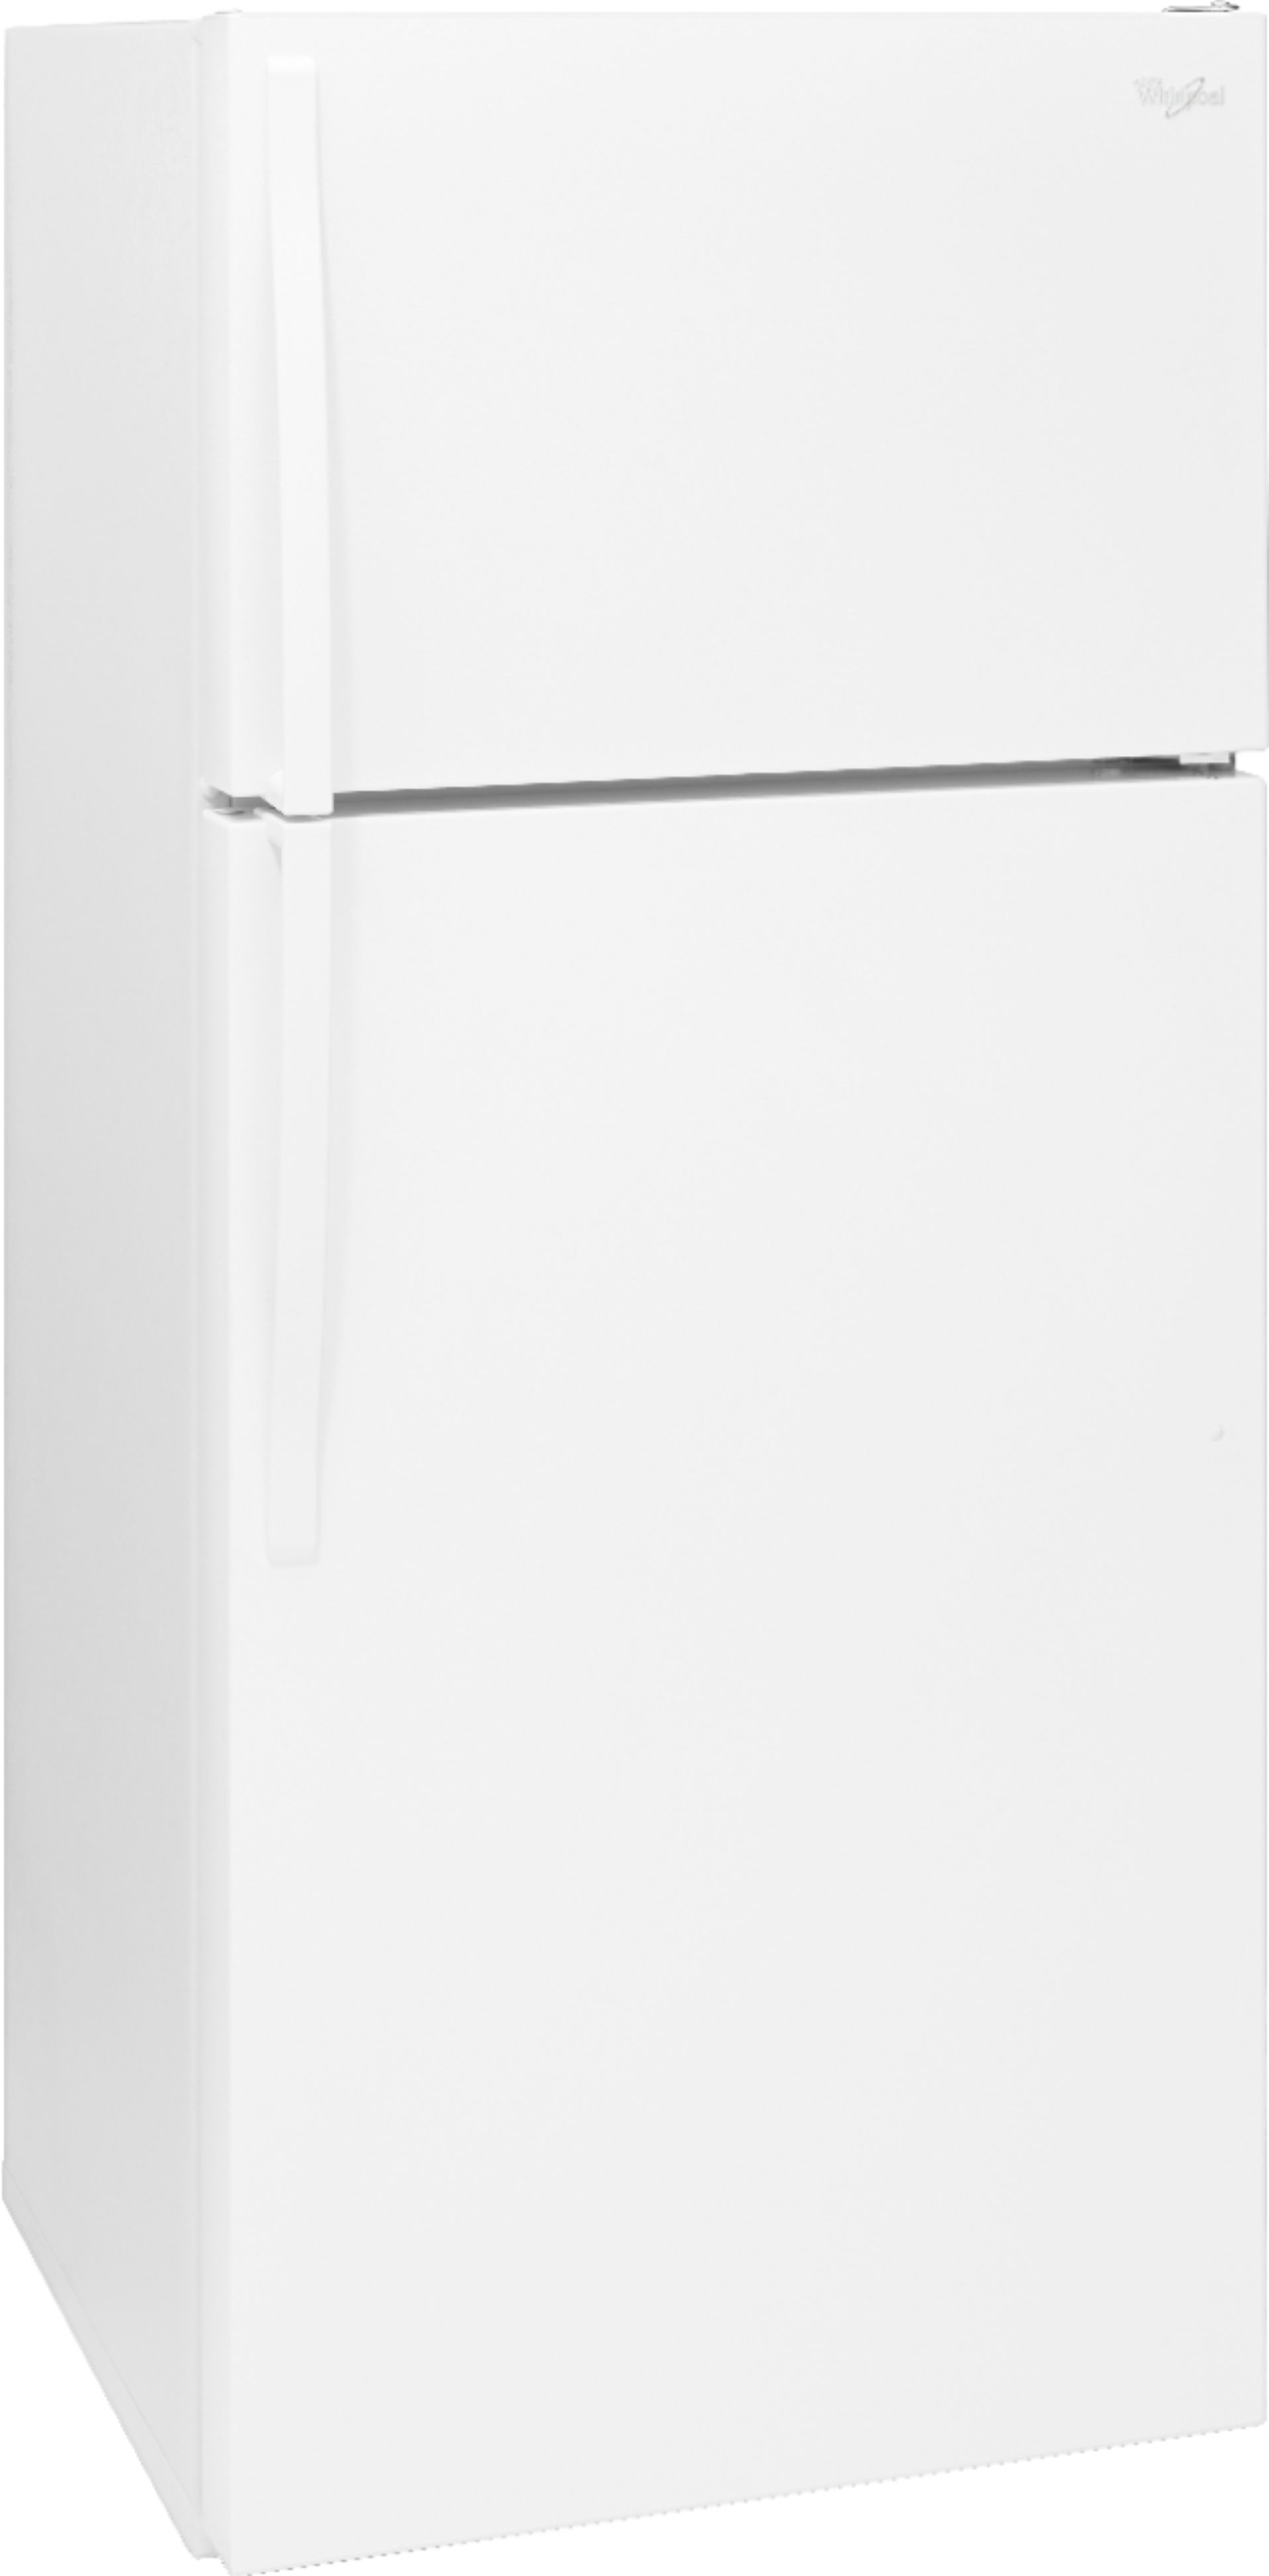 Angle View: Whirlpool - 16.0 Cu. Ft. Top-Freezer Refrigerator - White